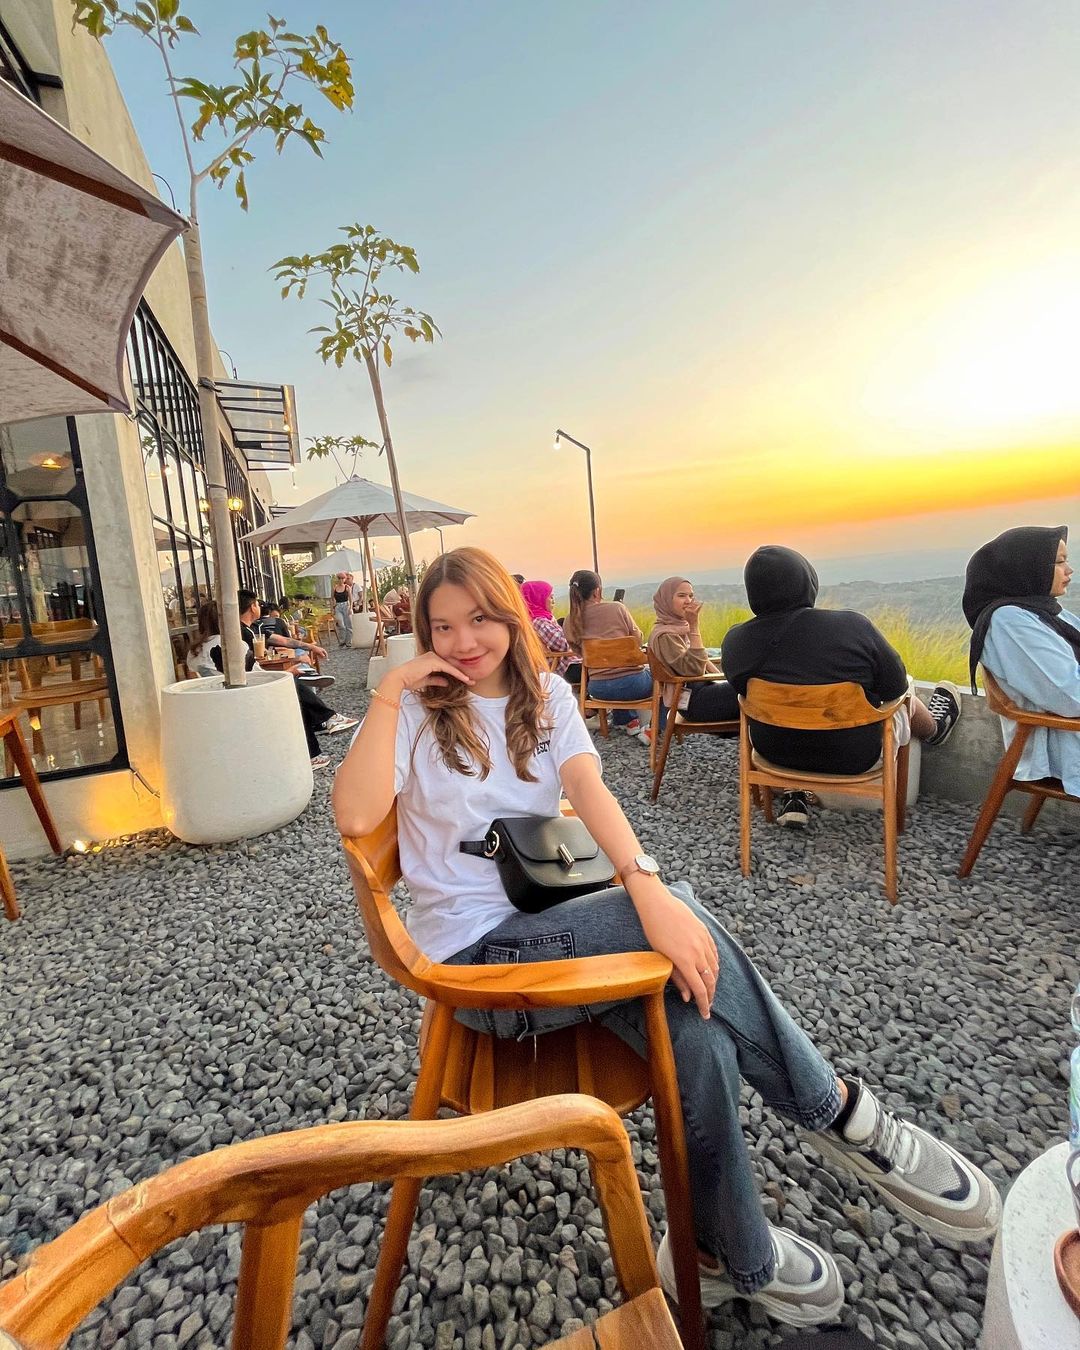 Jam Buka Sunset Dell Coffee Jogja Image From @nheo_